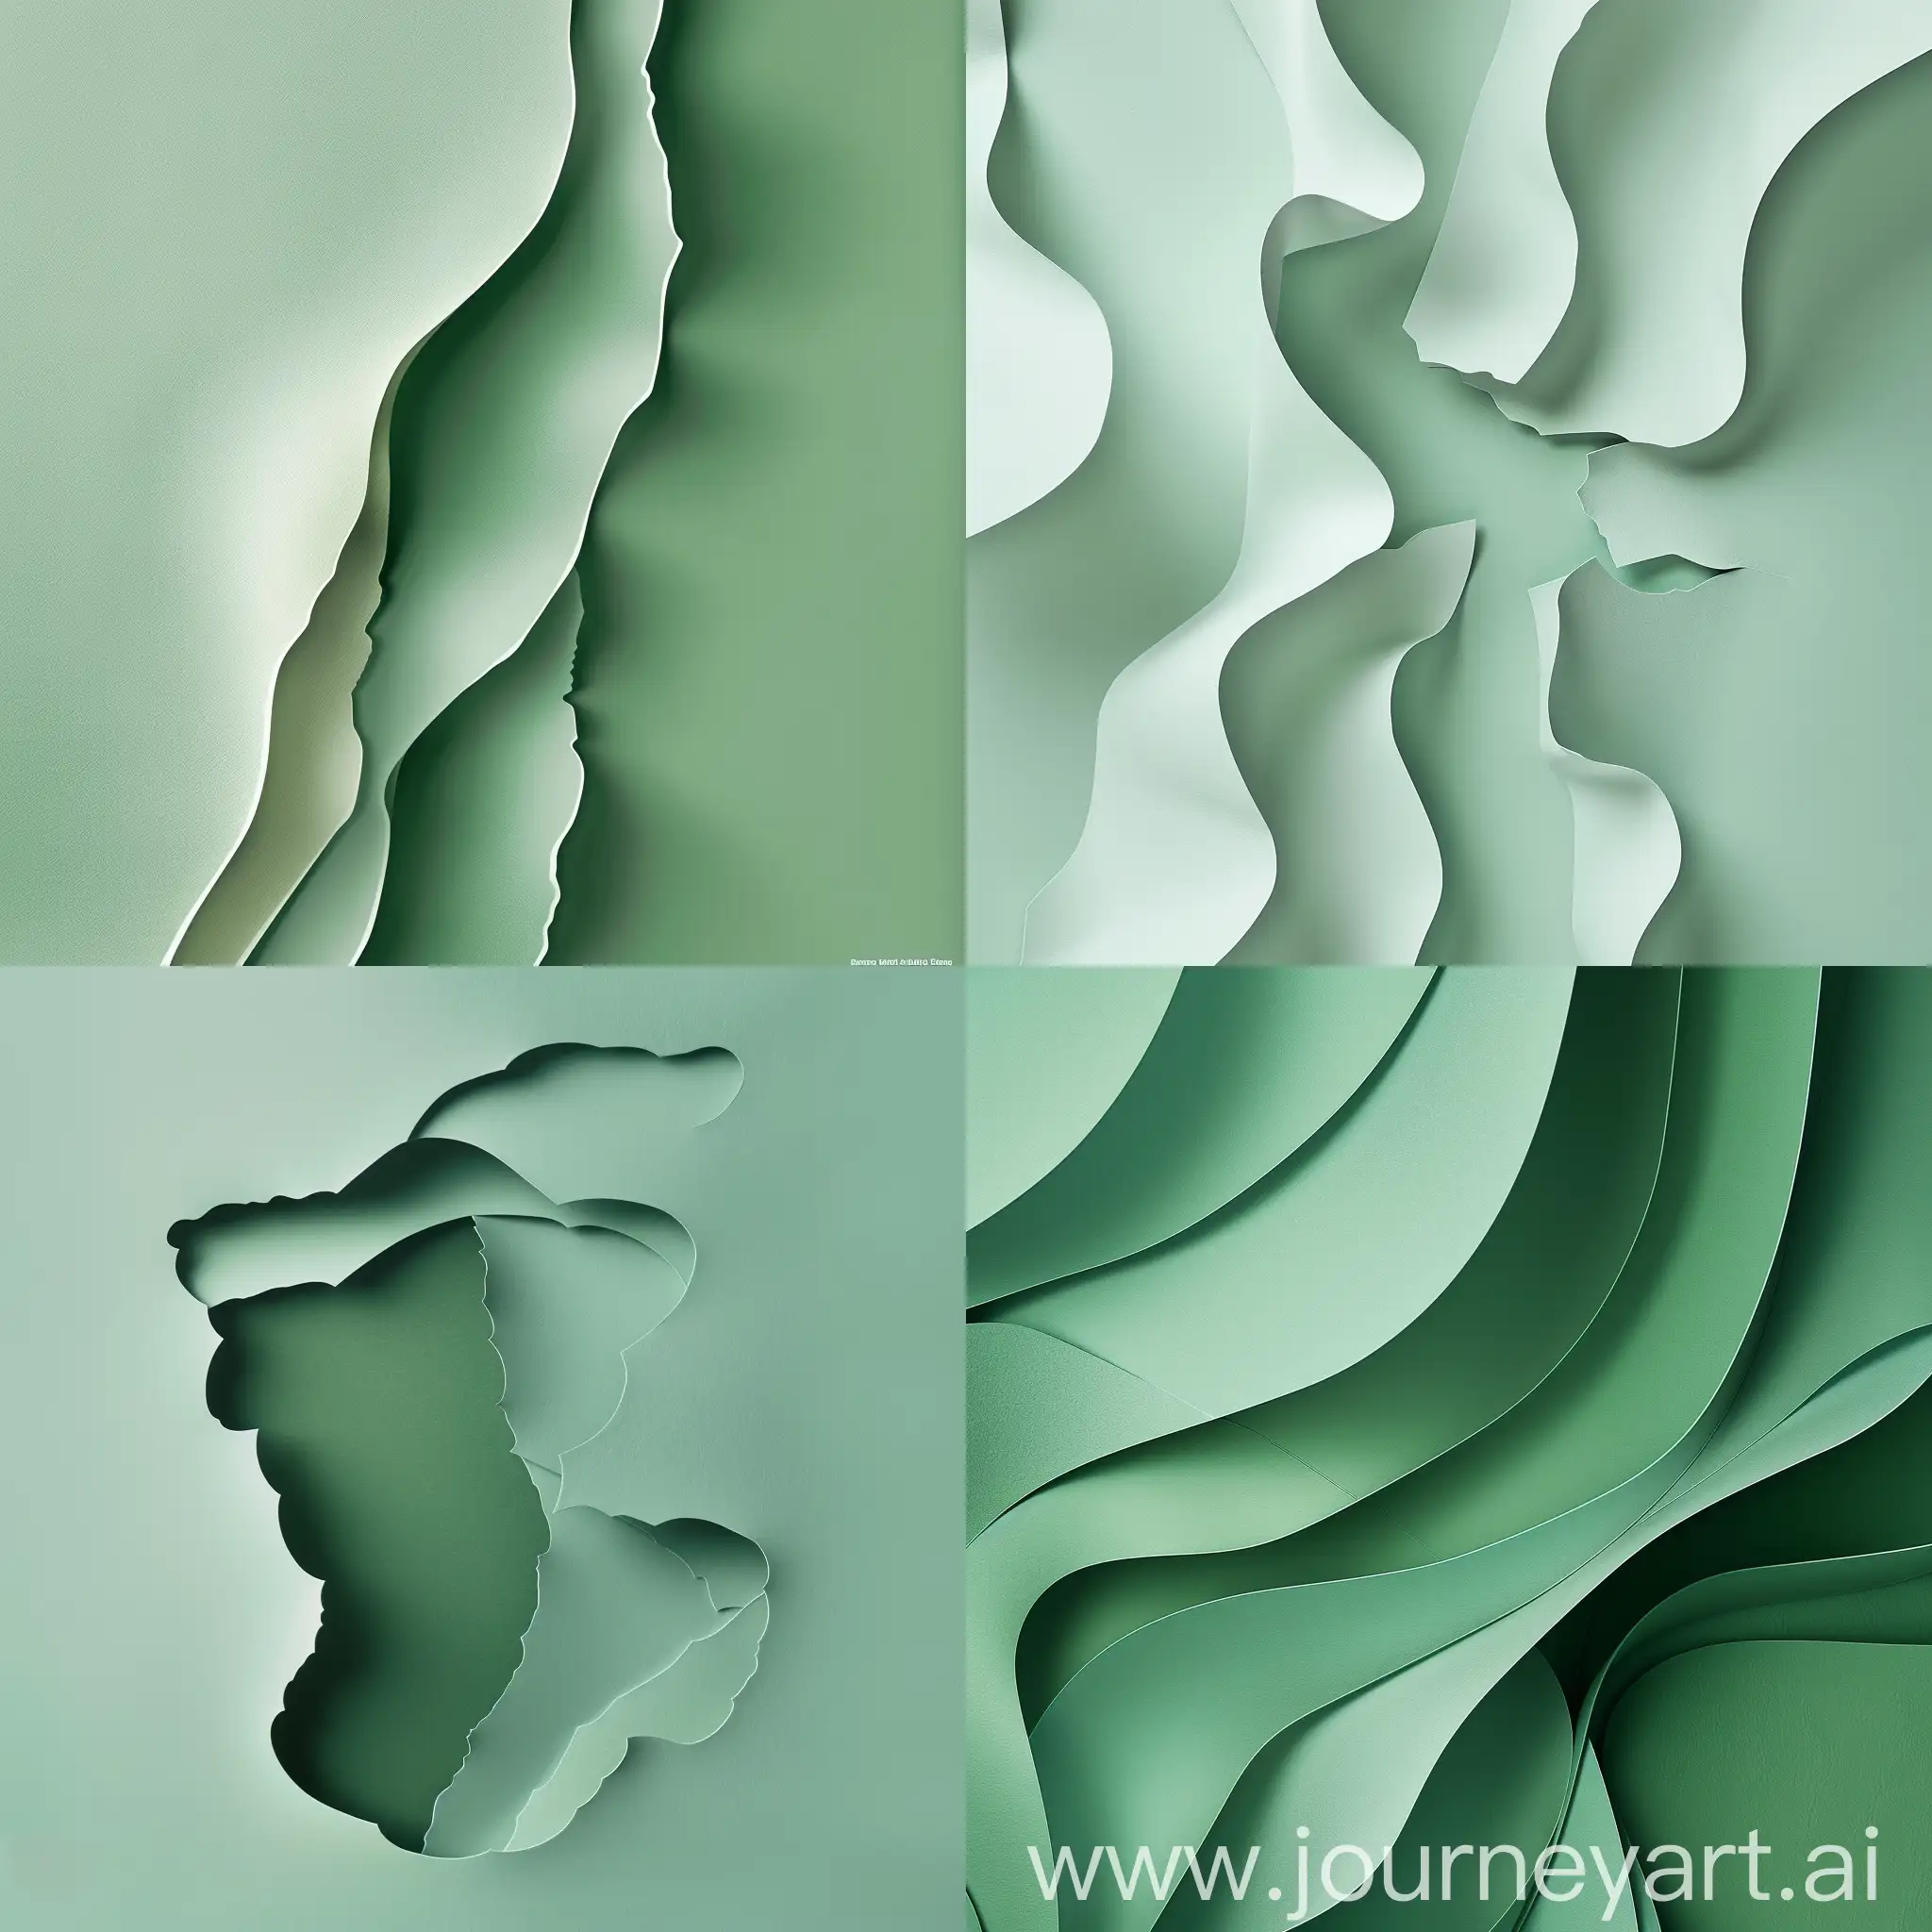 Graceful-PaperLike-UI-Design-with-Serene-Green-Background